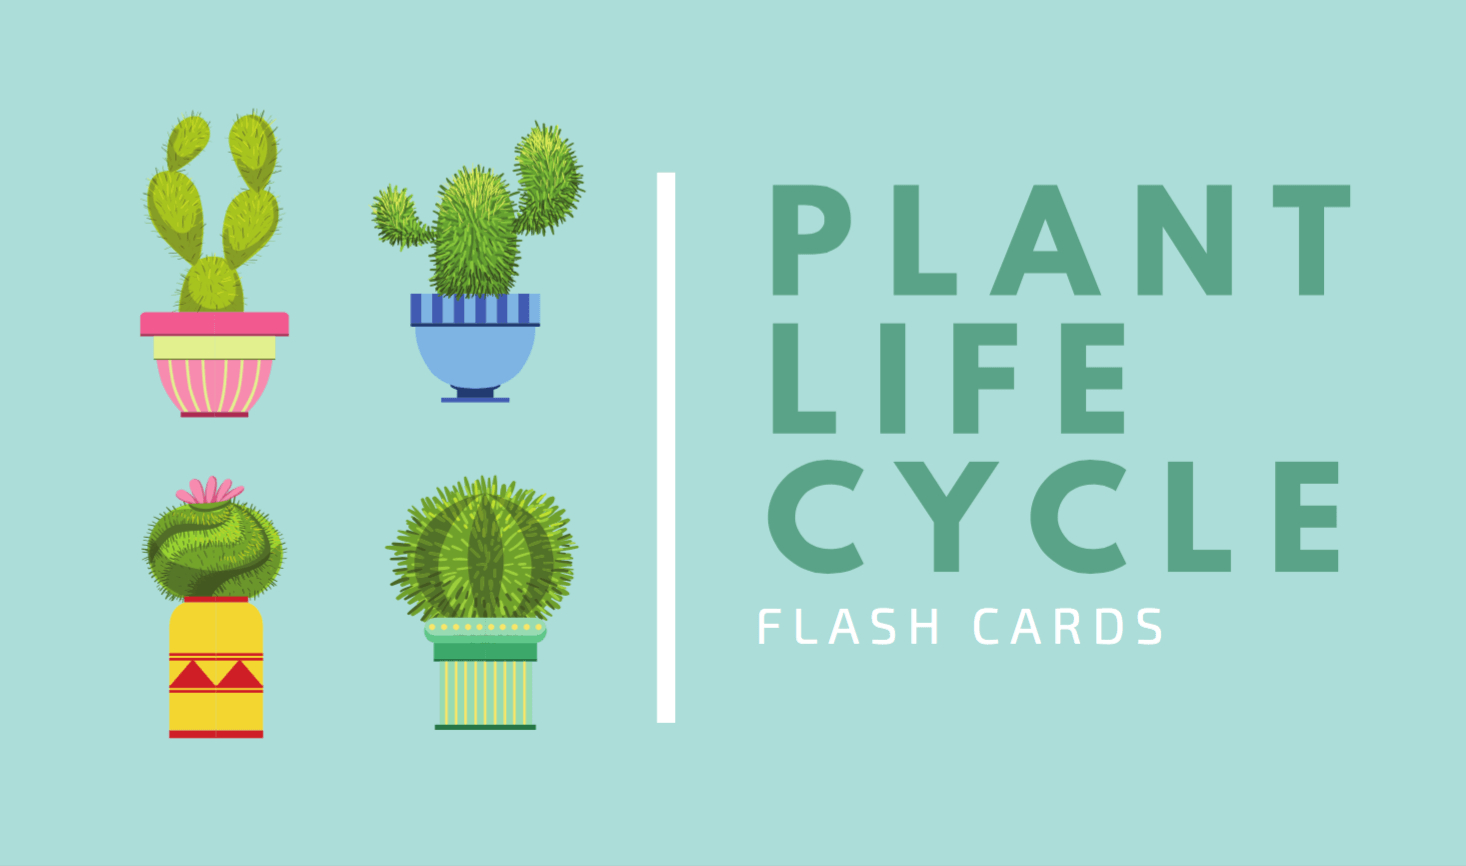 Free Online Flashcard Maker: Design Custom Flashcards - Canva - Free Printable Flash Card Maker Online